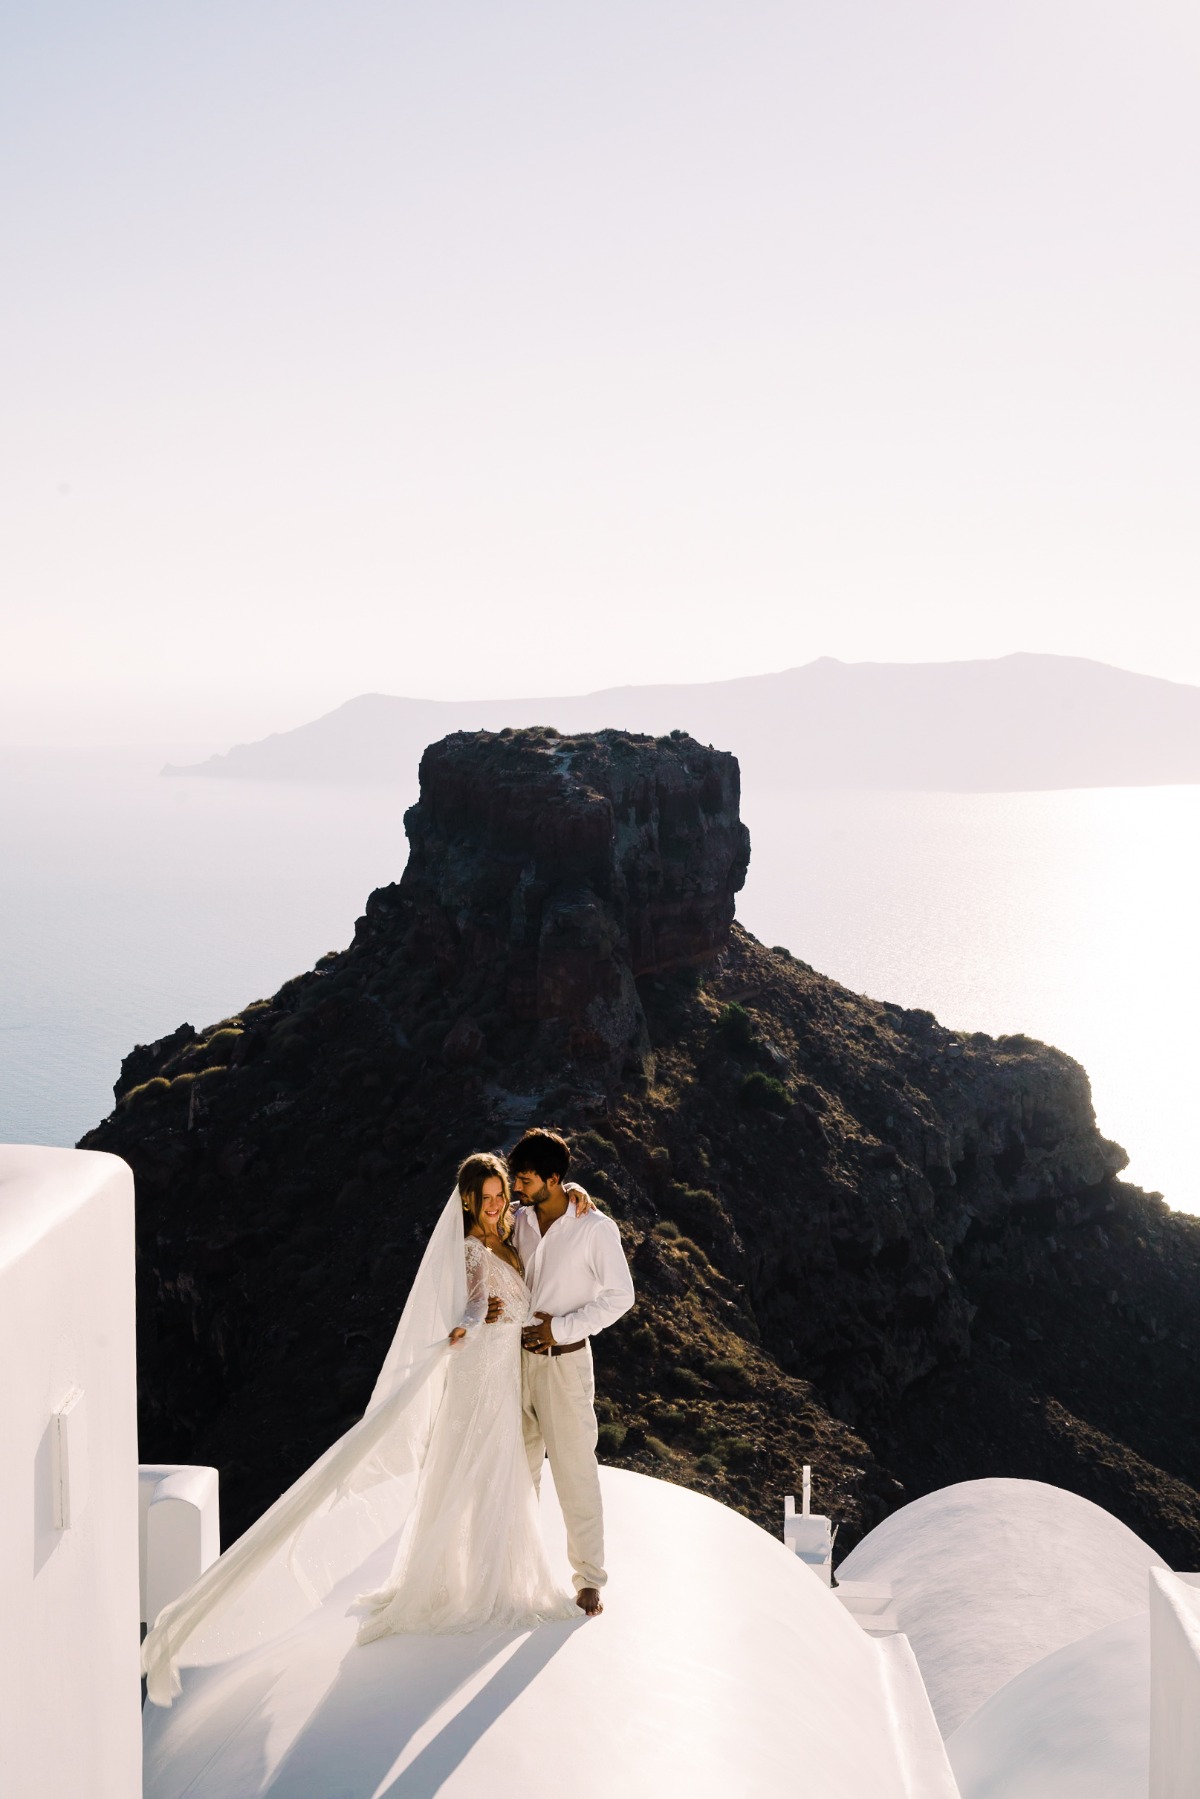 Get Away From It AllâA Magical Elopement On The Cliffs of Santorini